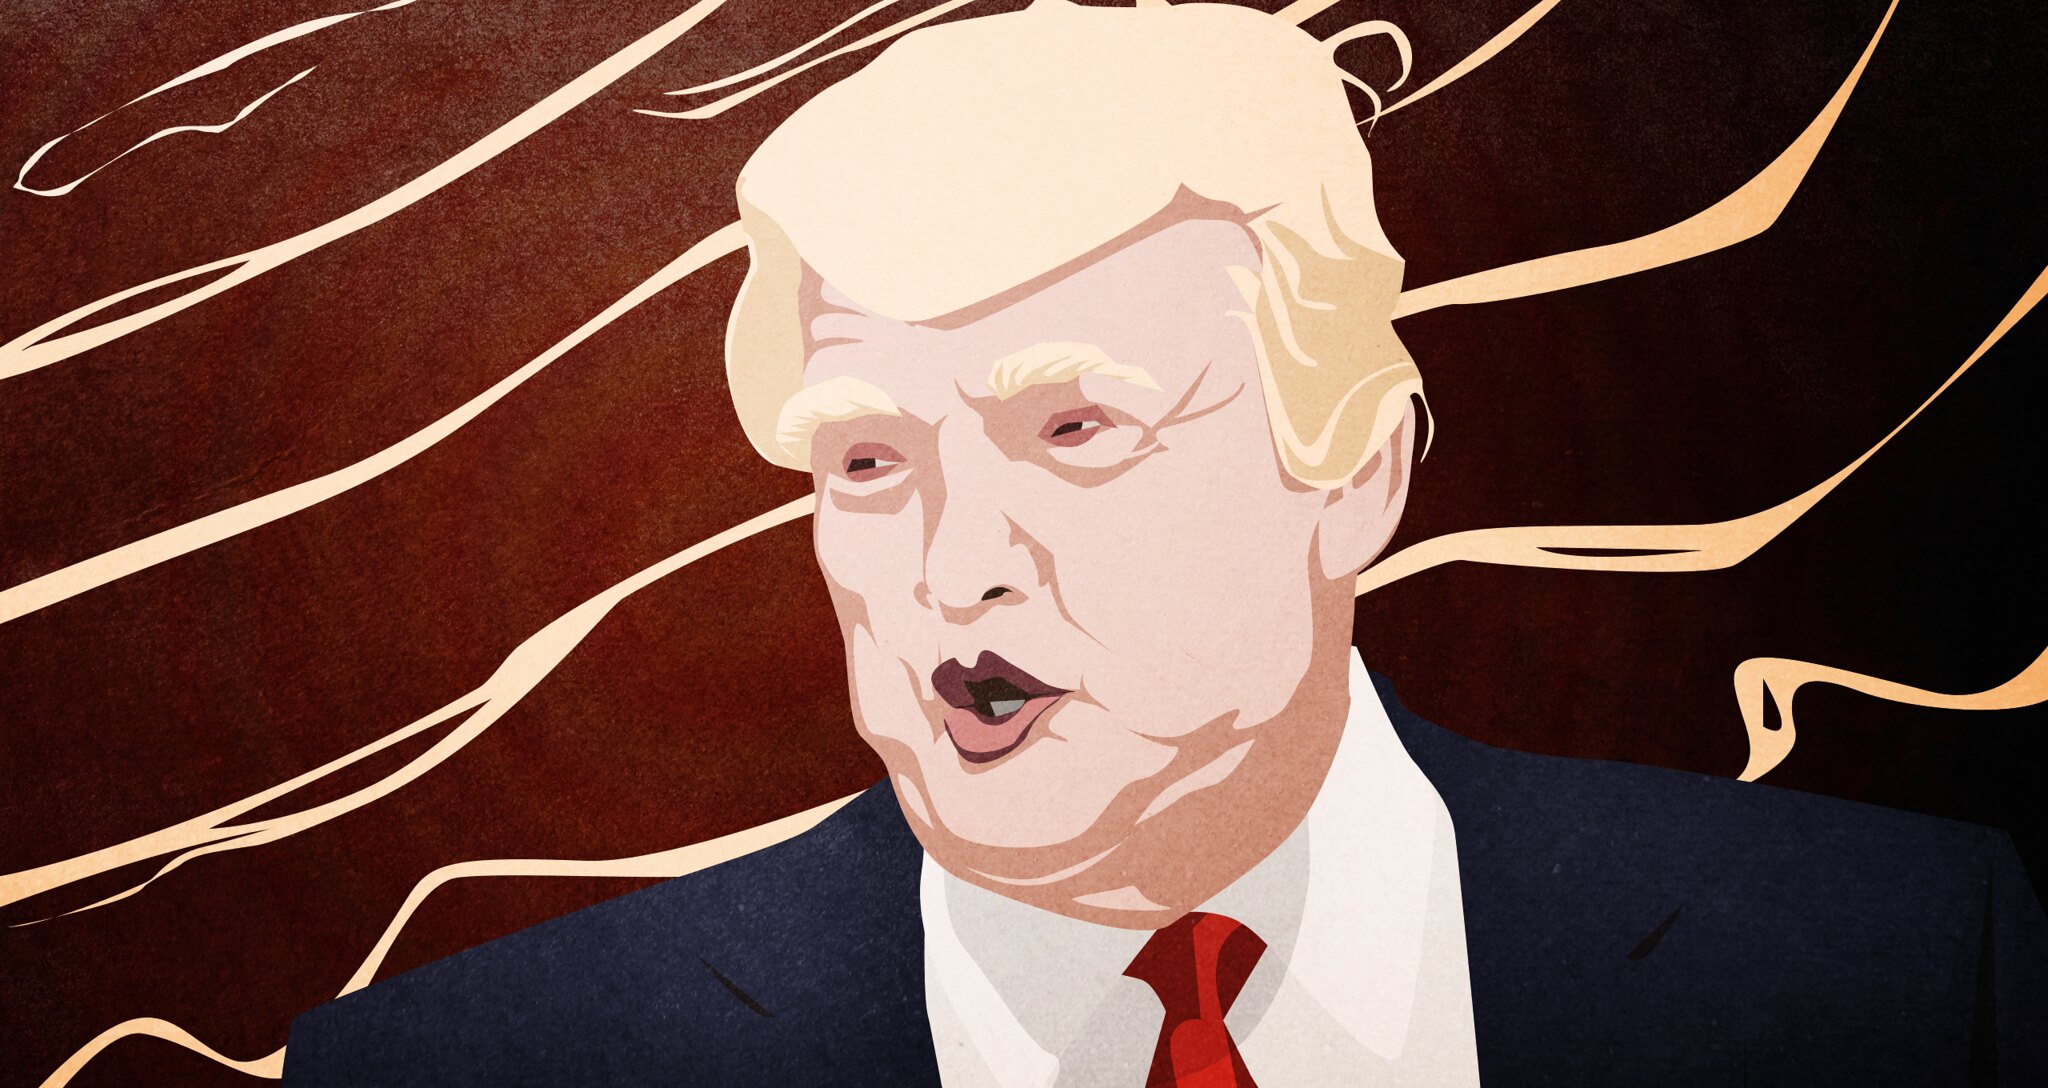 An illustration of Donald Trump.